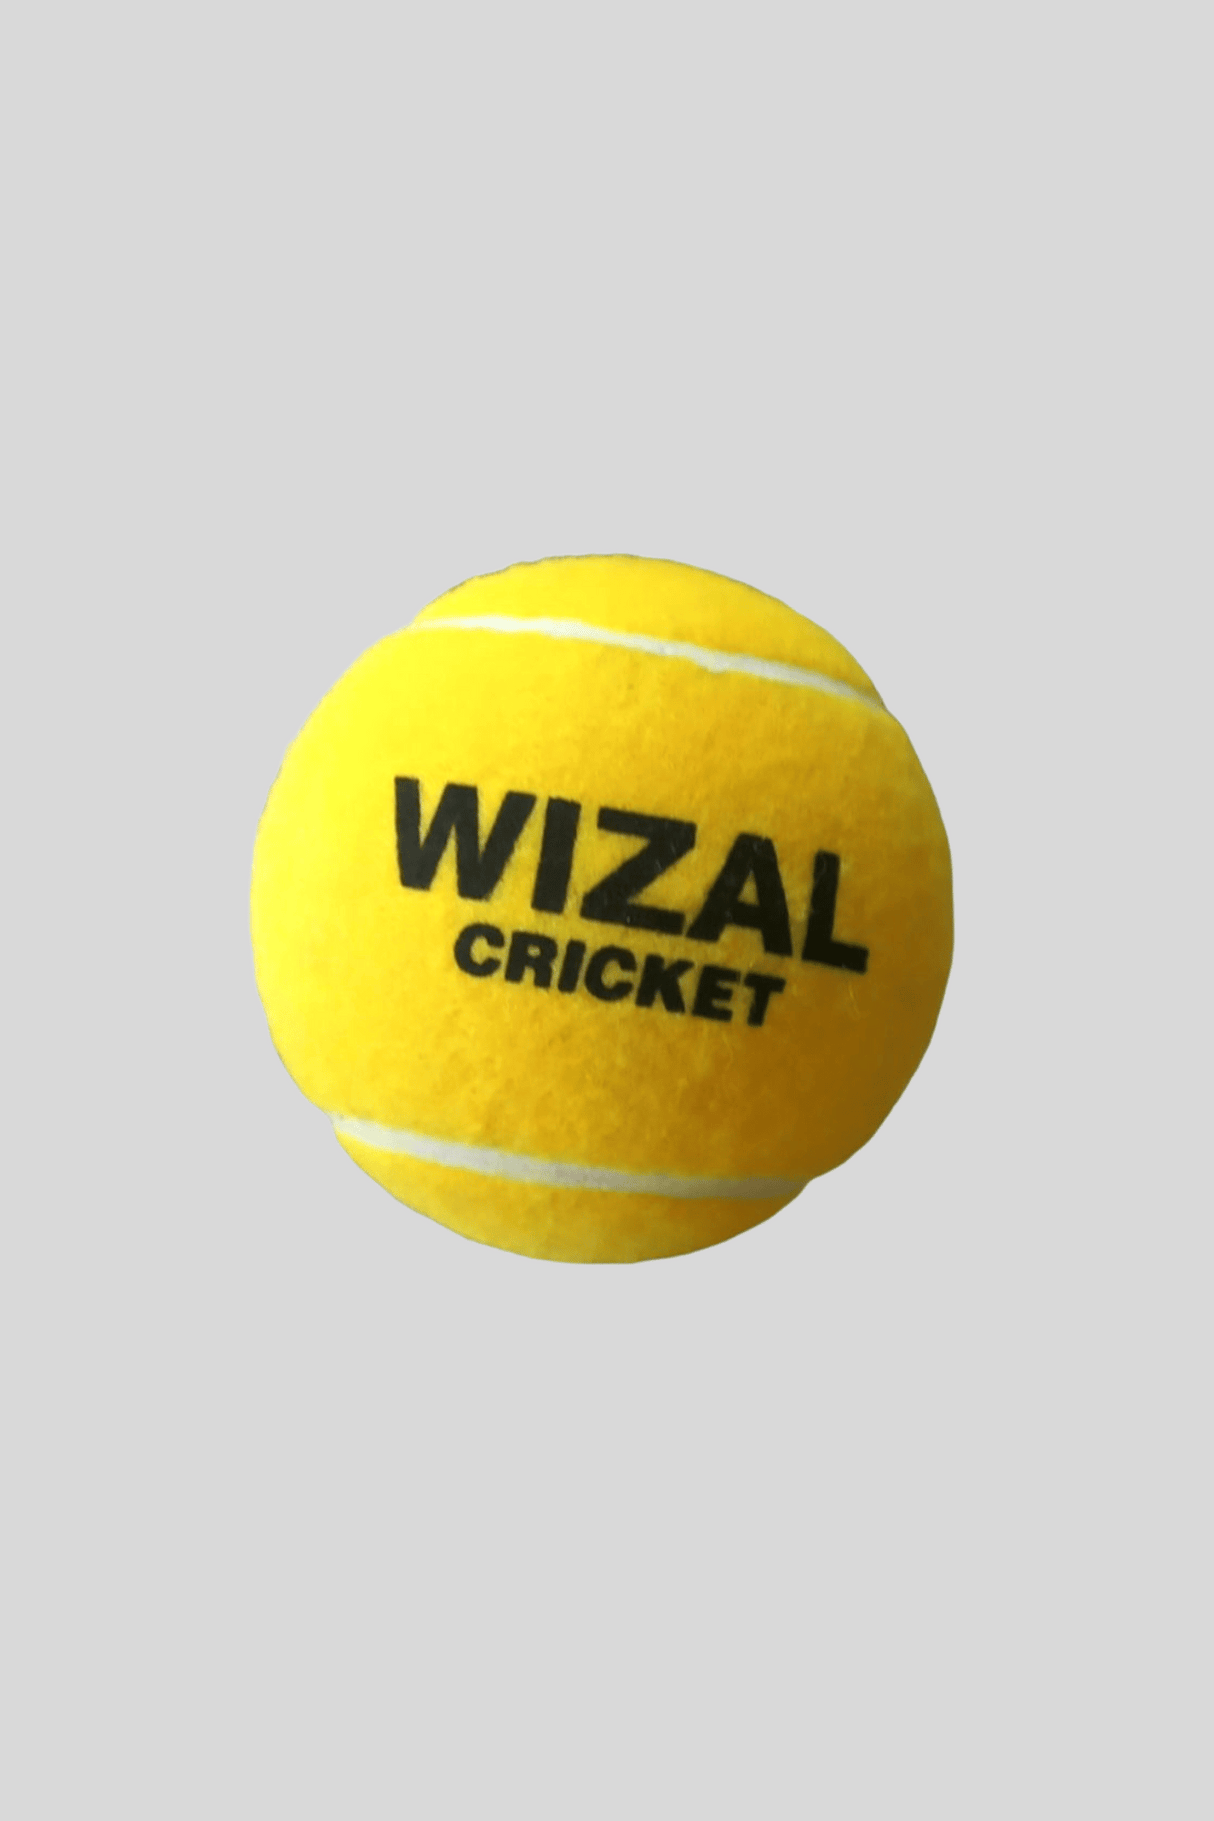 tennis ball wizal 3pc